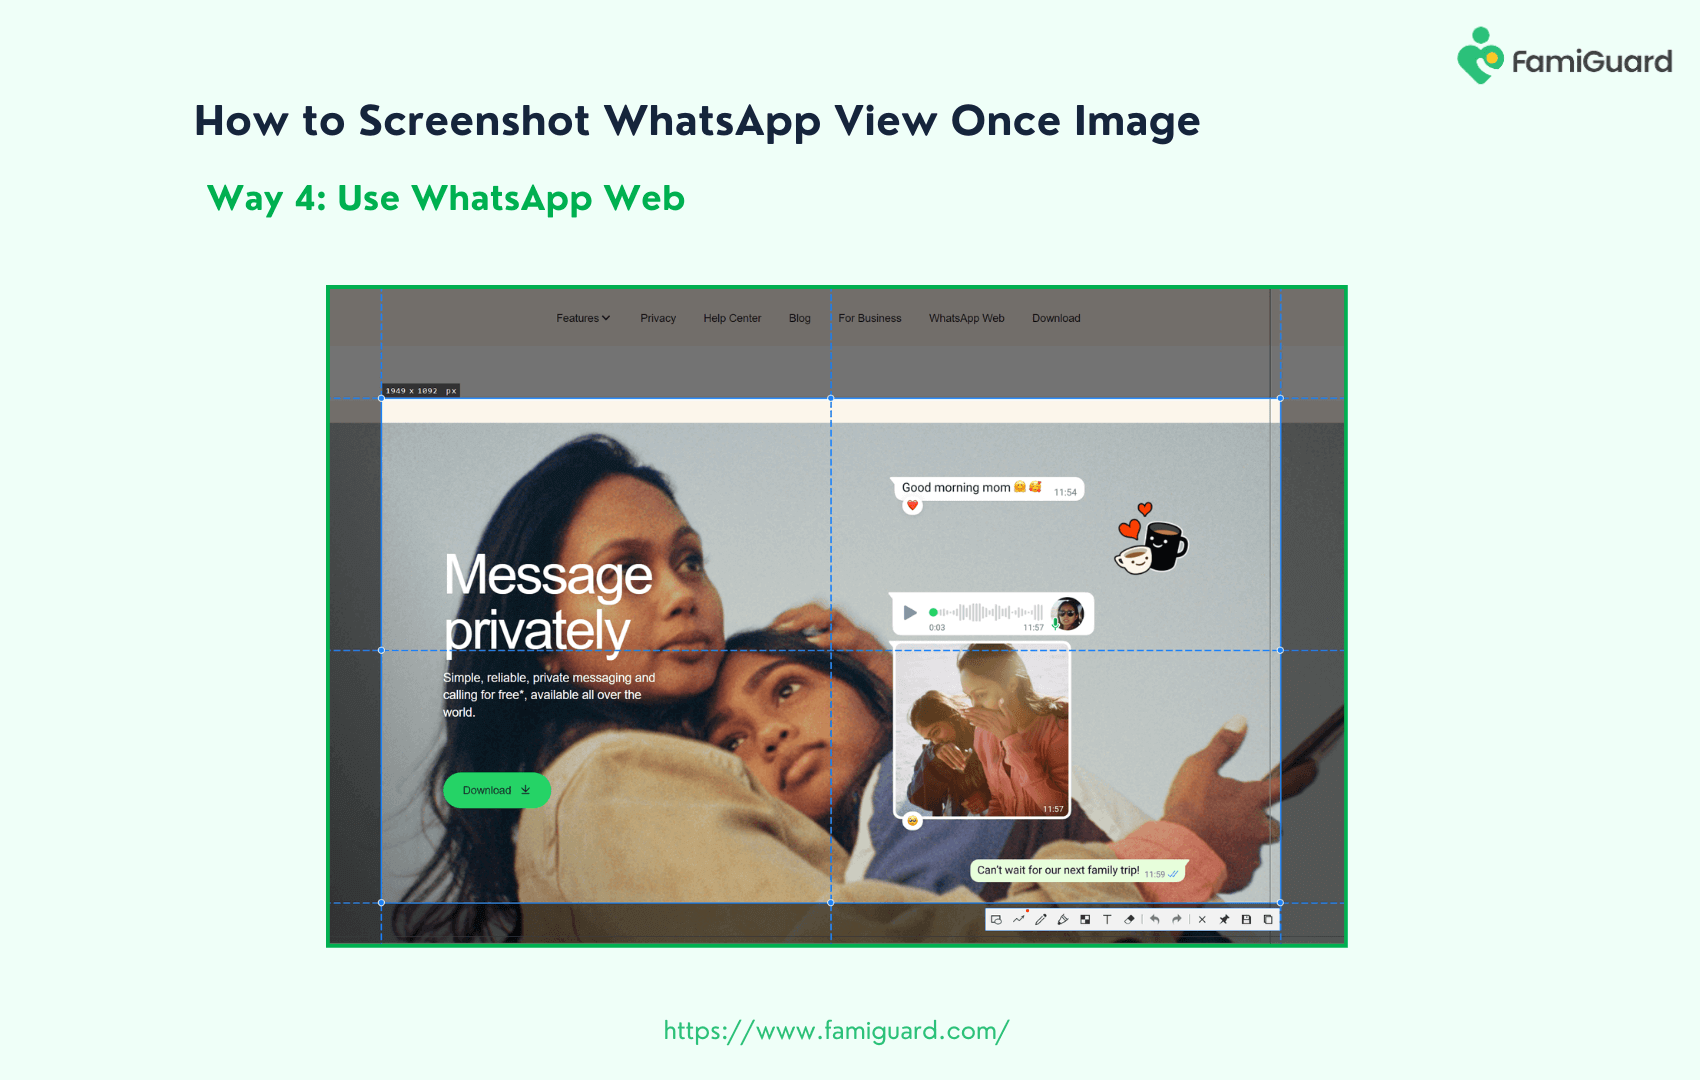 Use WhatsApp Web to Screenshot WhatsApp View Once Image